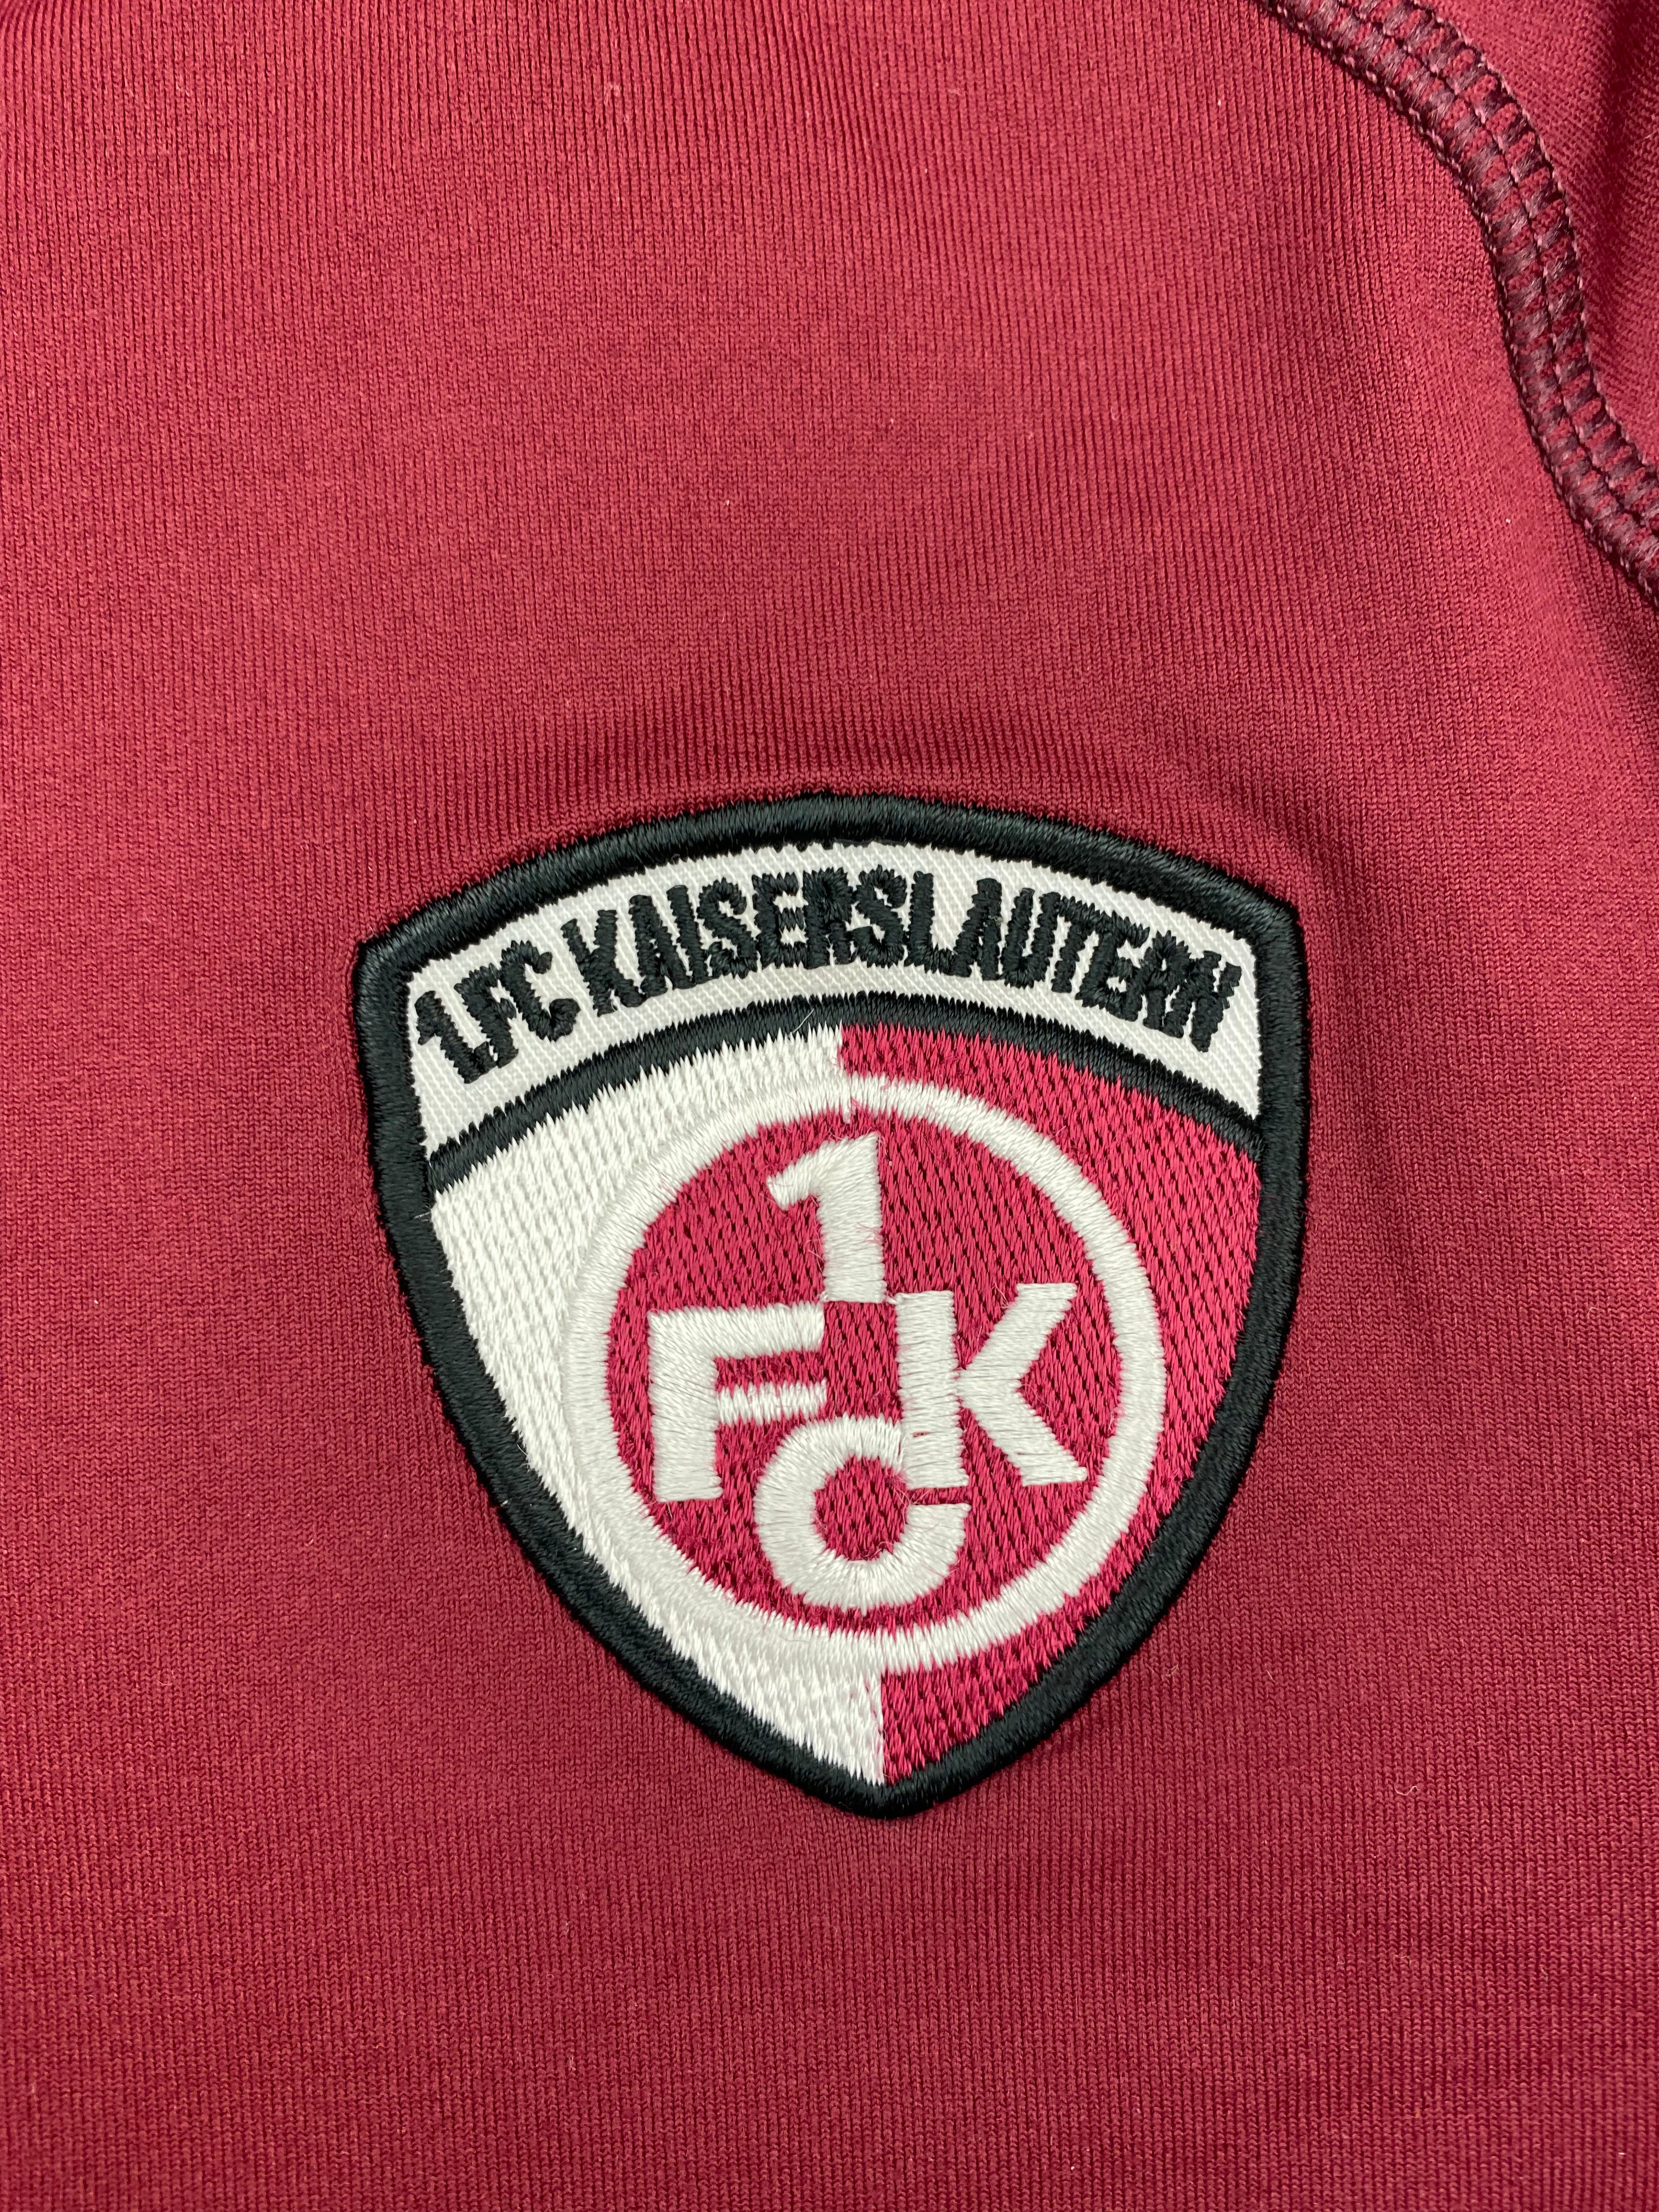 2003/04 Kaiserslautern Home Shirt (S) 7.5/10